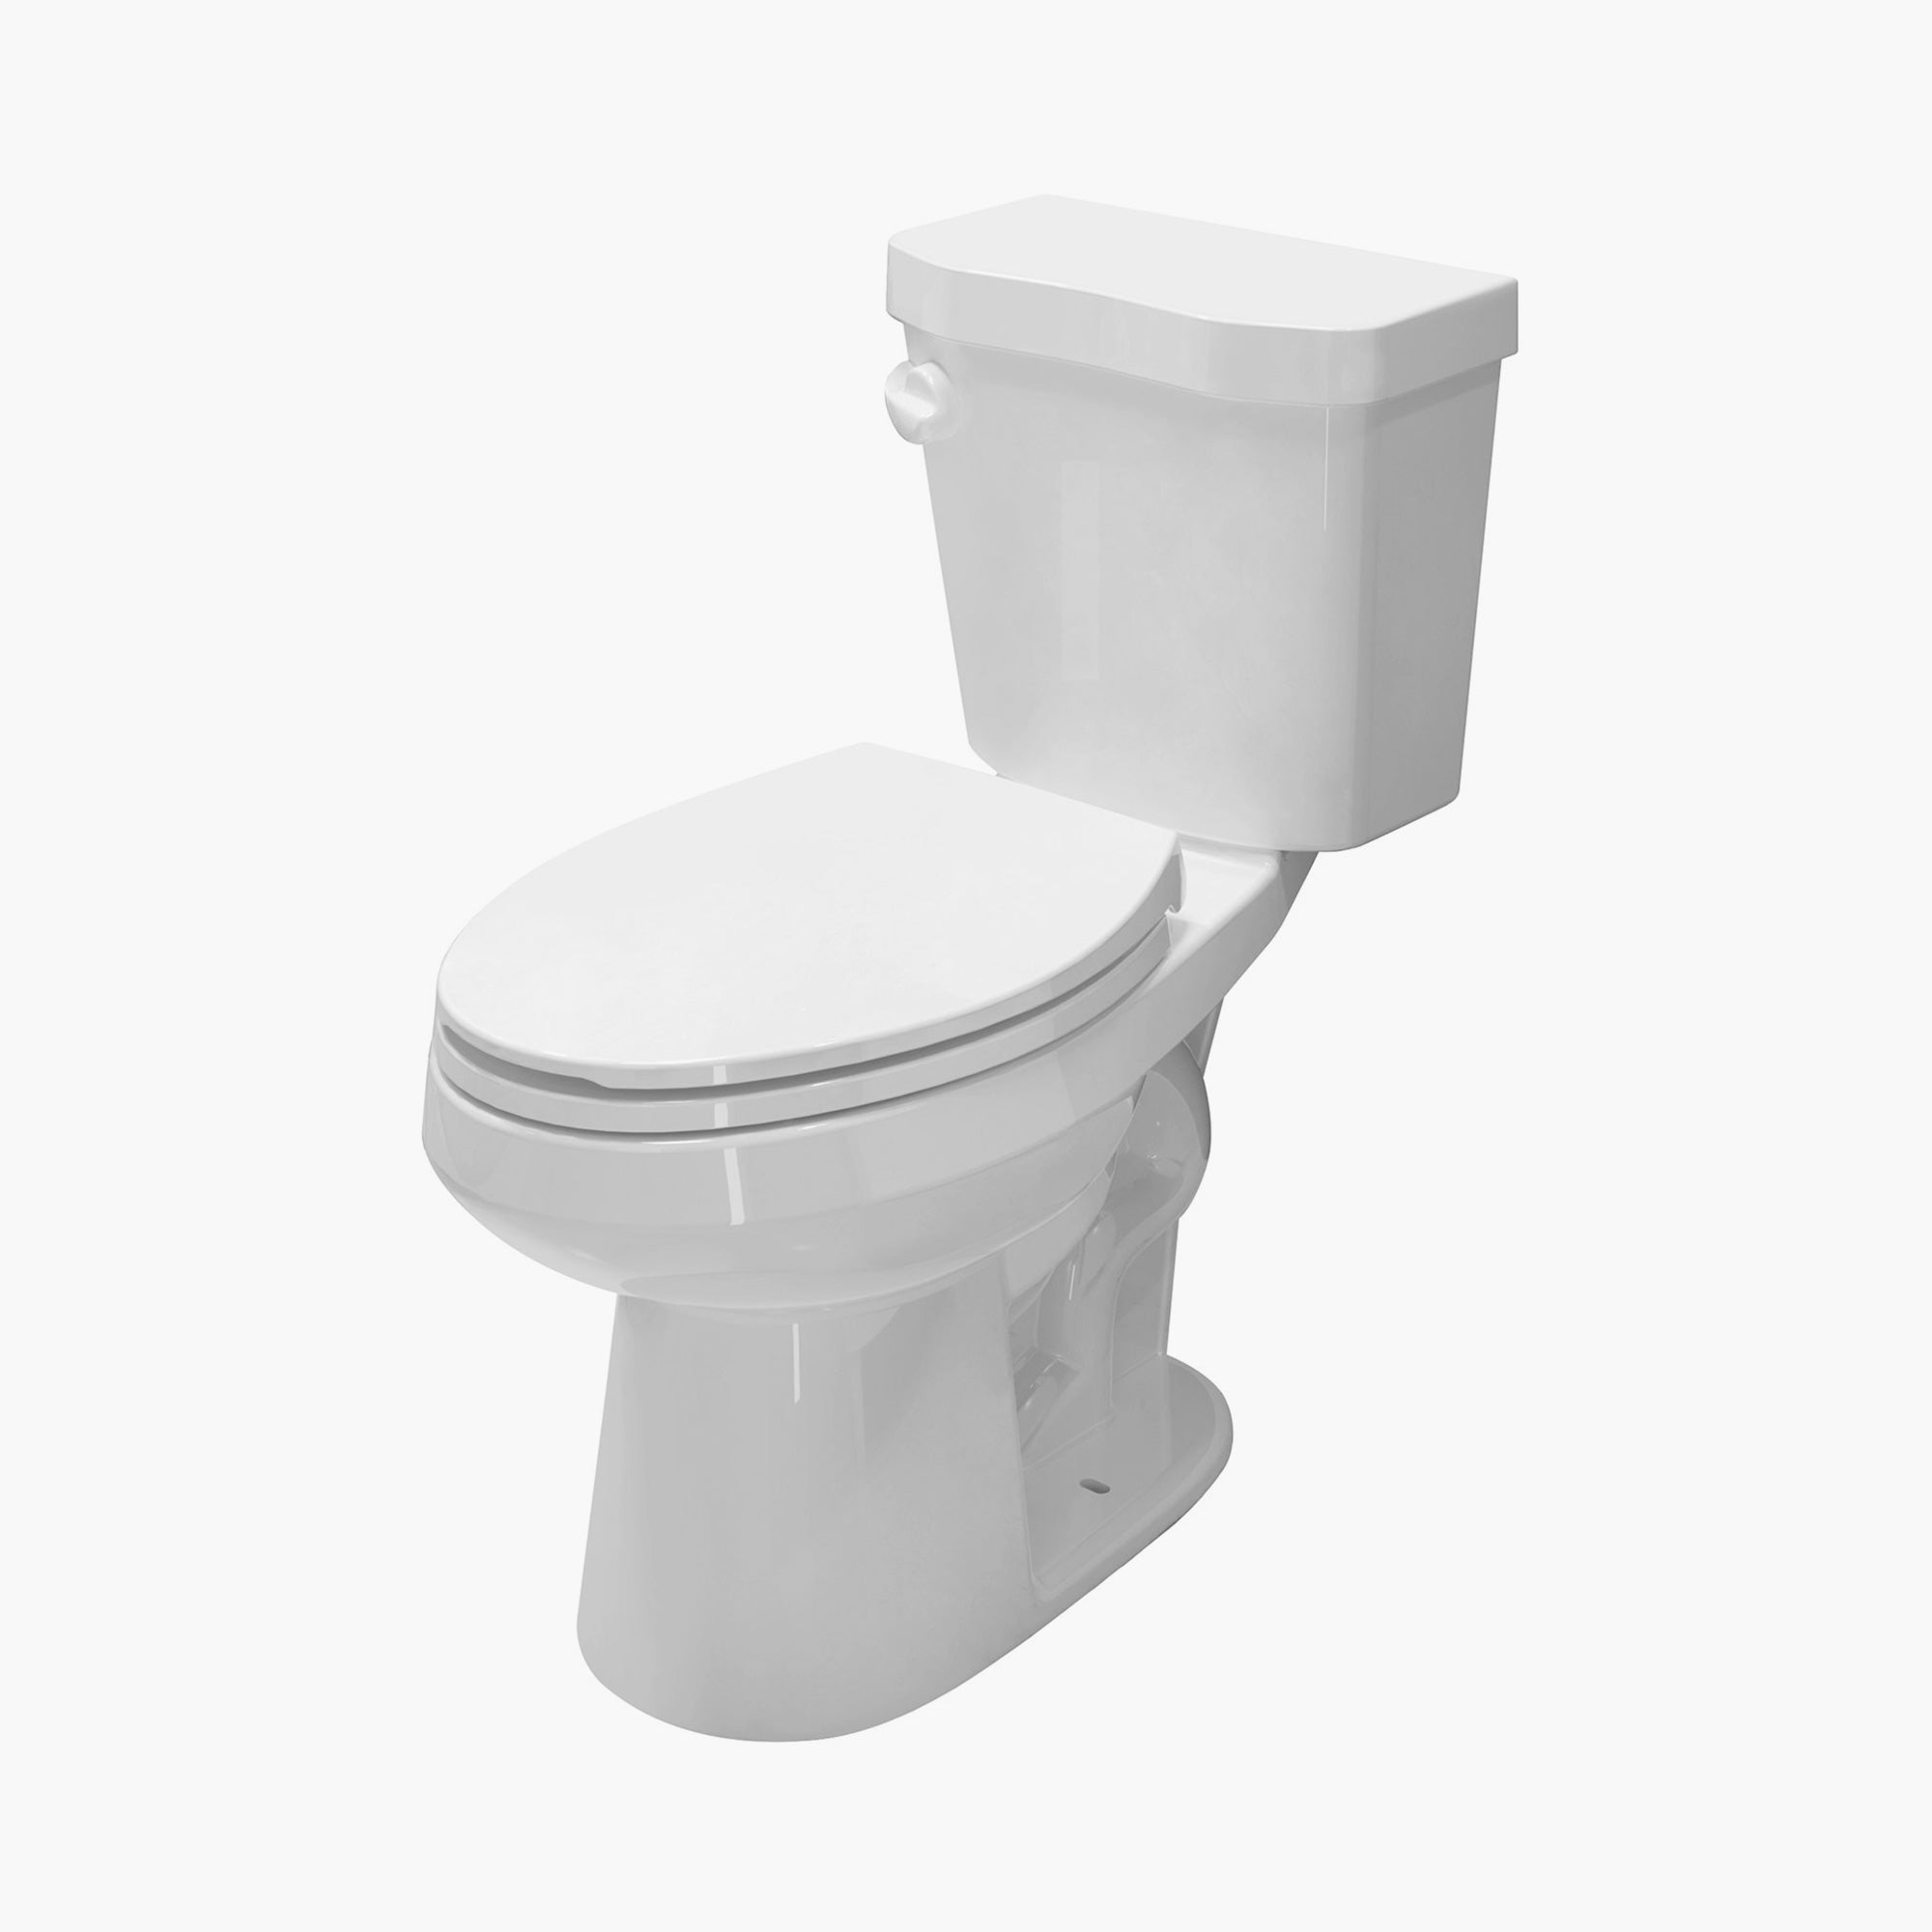 HOROW Dual Flush 1.28 GPF Elongated Floor Mounted 2 Piece Toilet Model HWTT-E01S